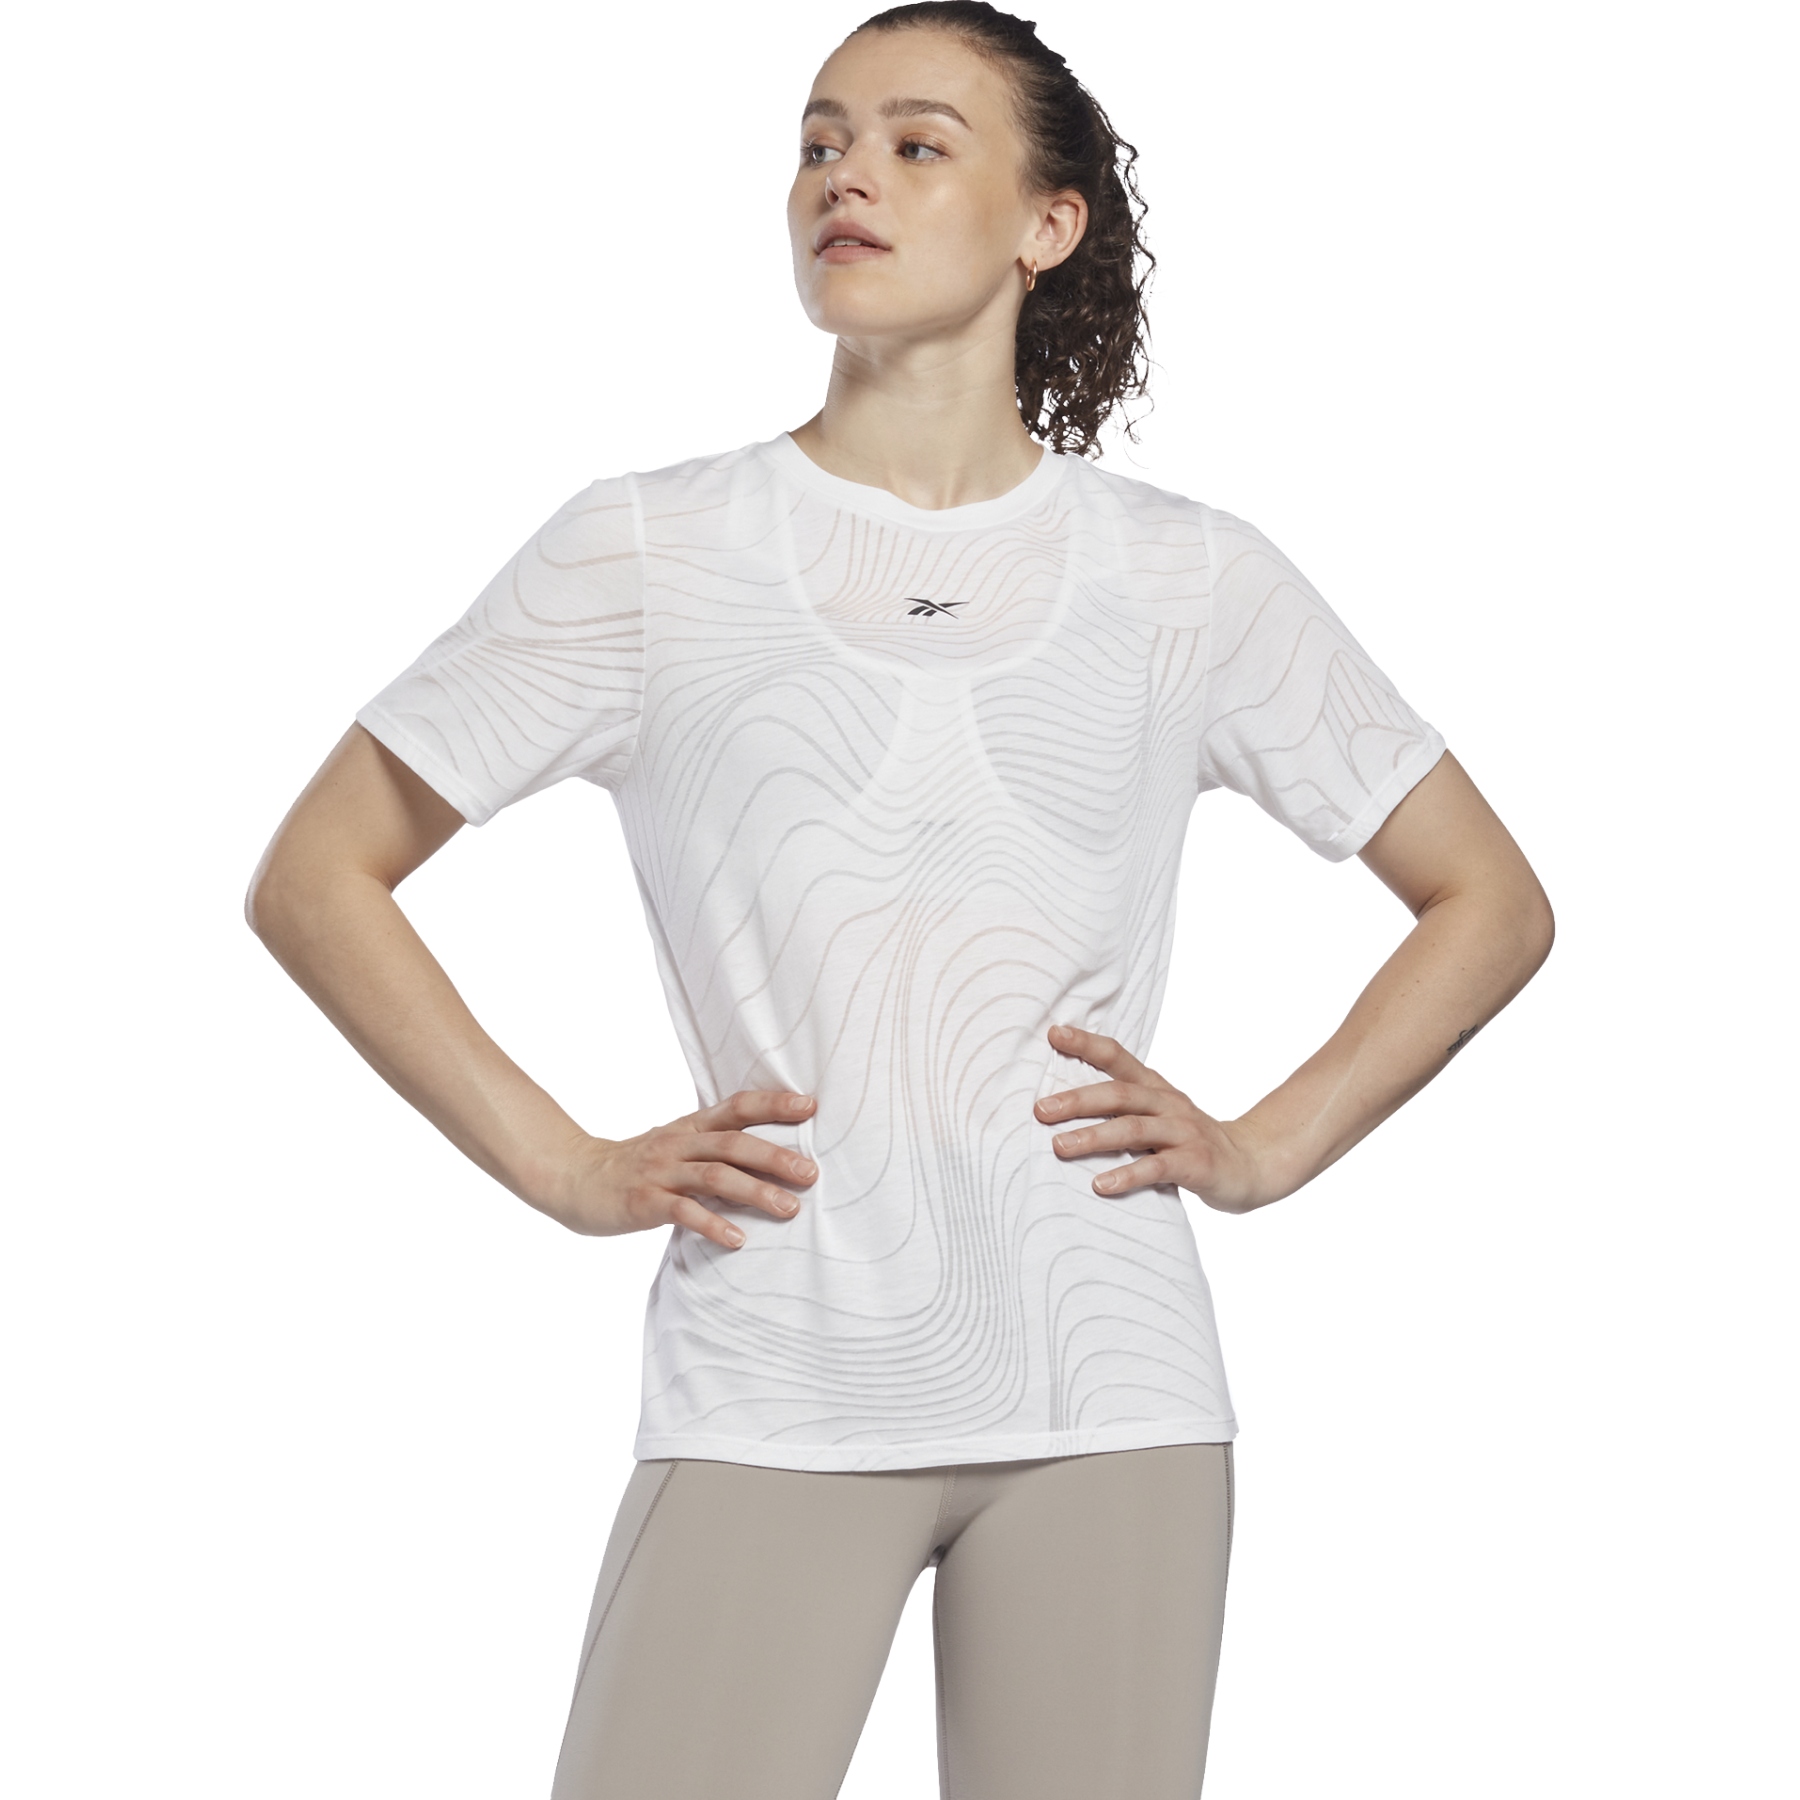 Productfoto van Reebok Burnout T-Shirt Dames - wit